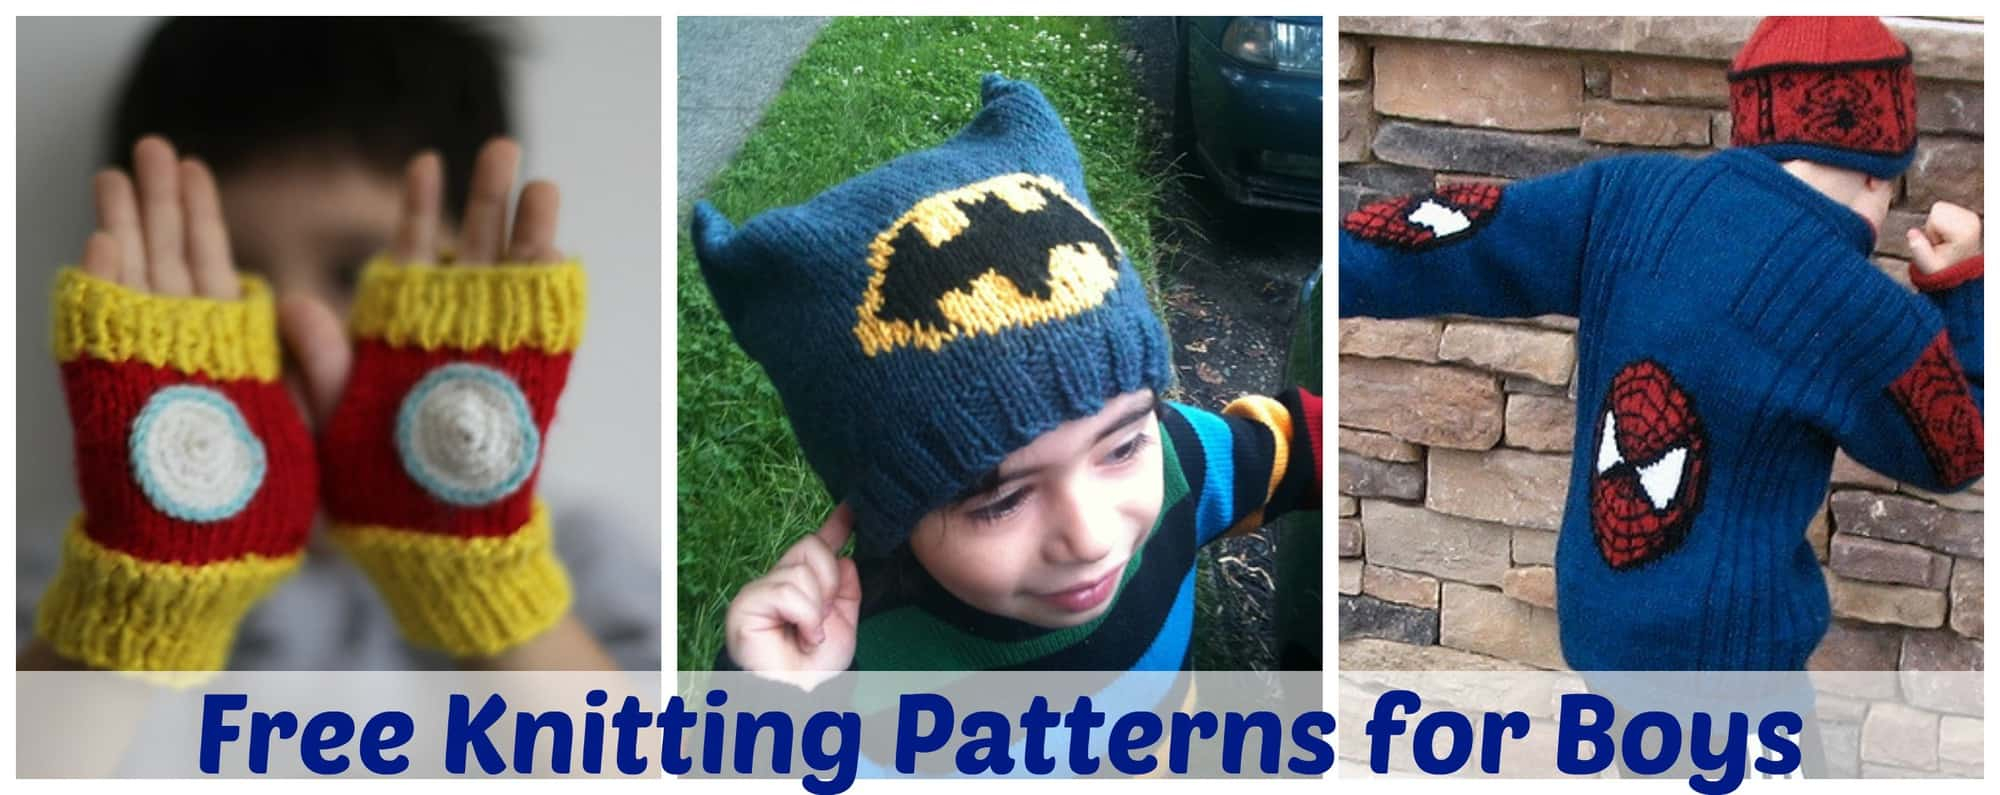 Batman Doll Knitting Pattern The Huge List Of Free Knitting Patterns For Boys Little Miss Kate